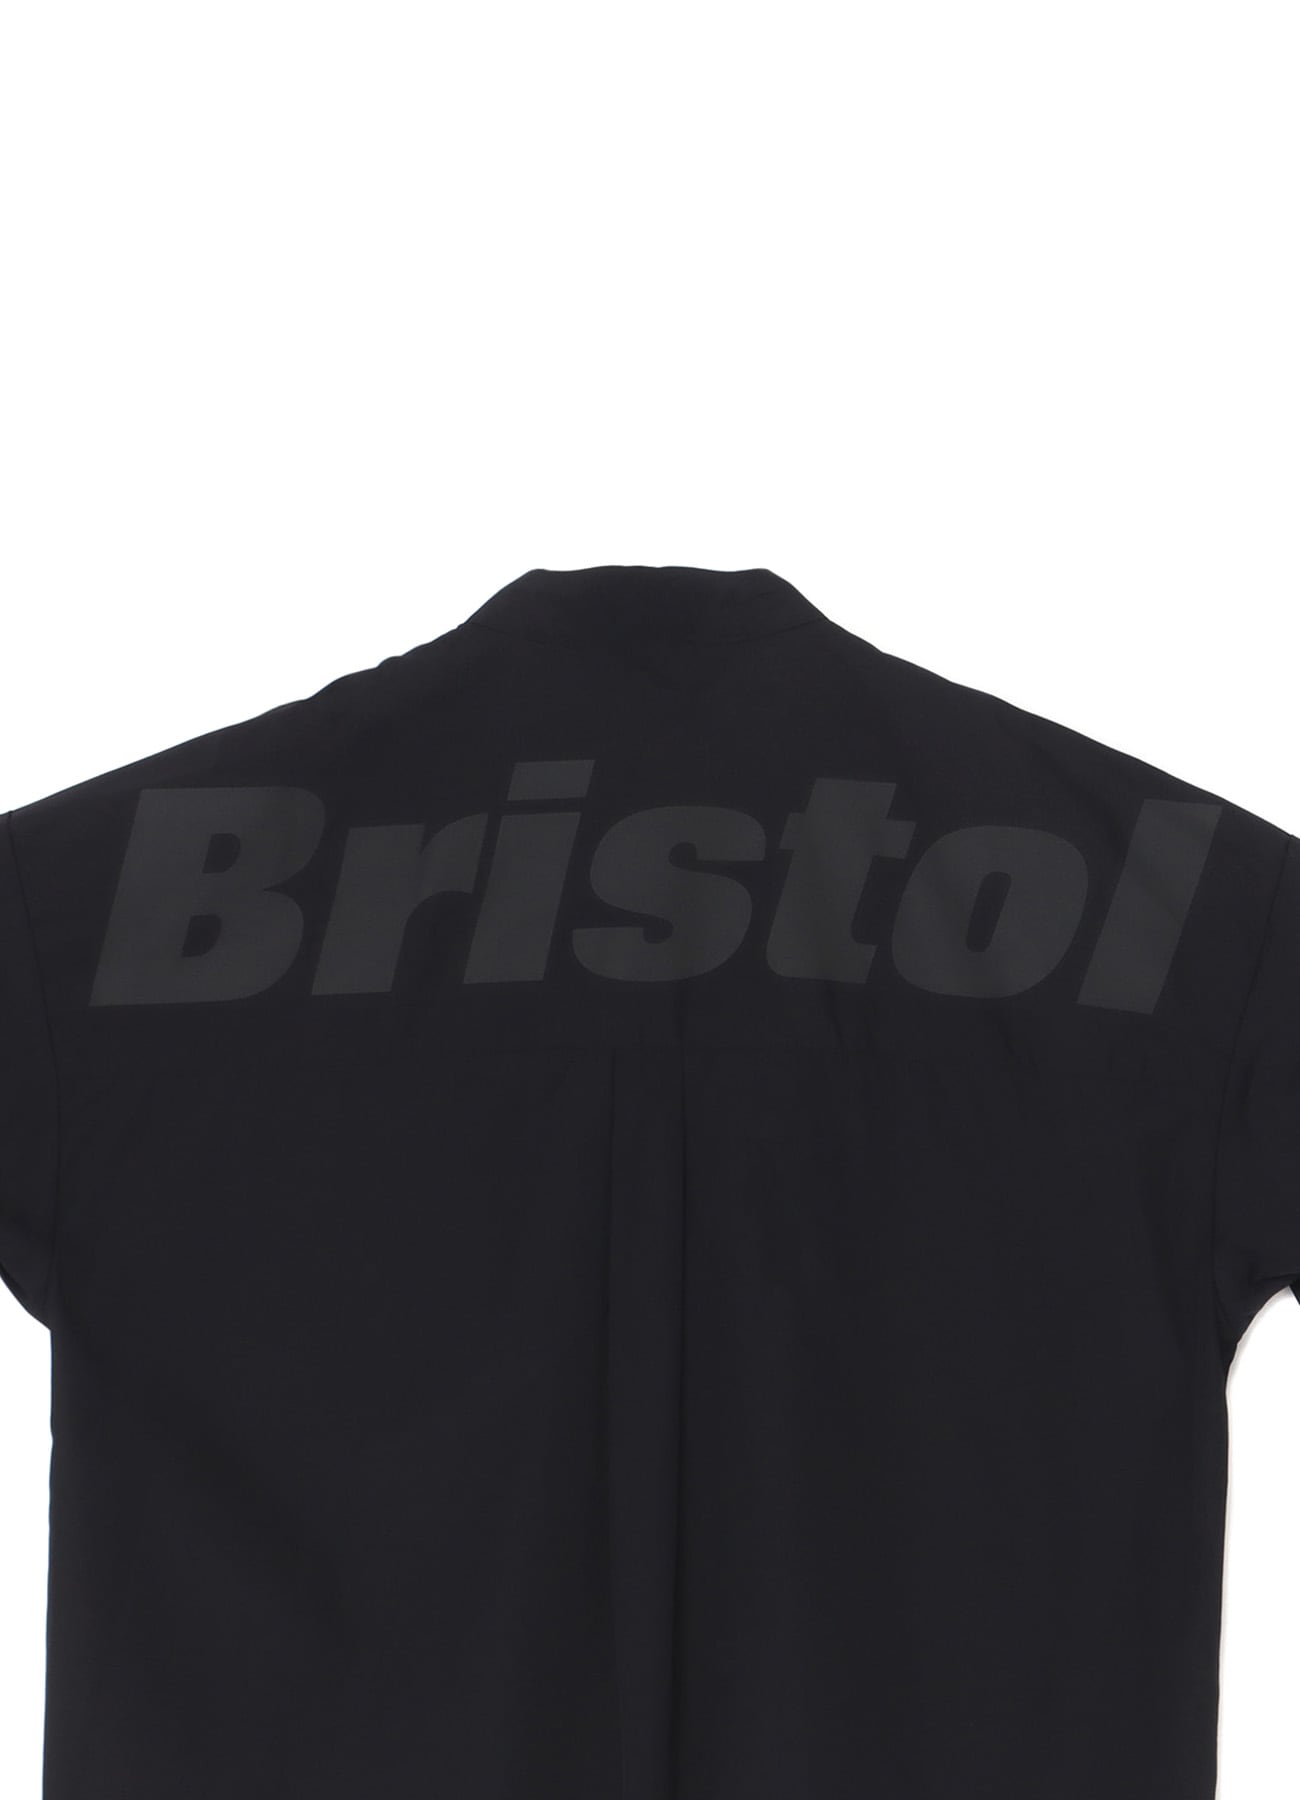 F.C.Real Bristol BIG LOGO BAGGY SHIRT(M BLACK): F.C.Real Bristol